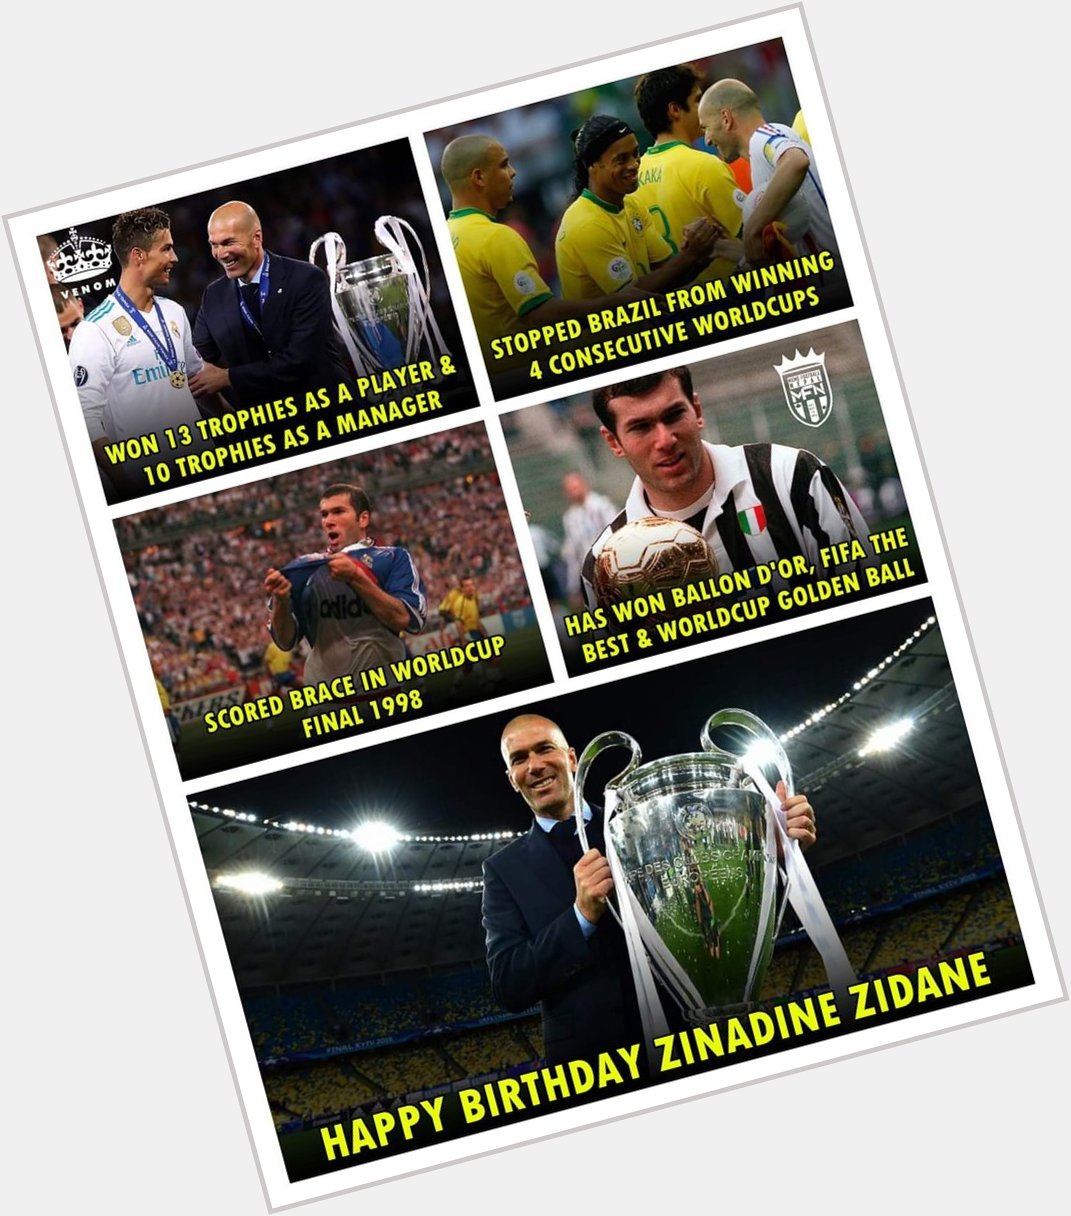 Happy birthday Zinedine Zidane  